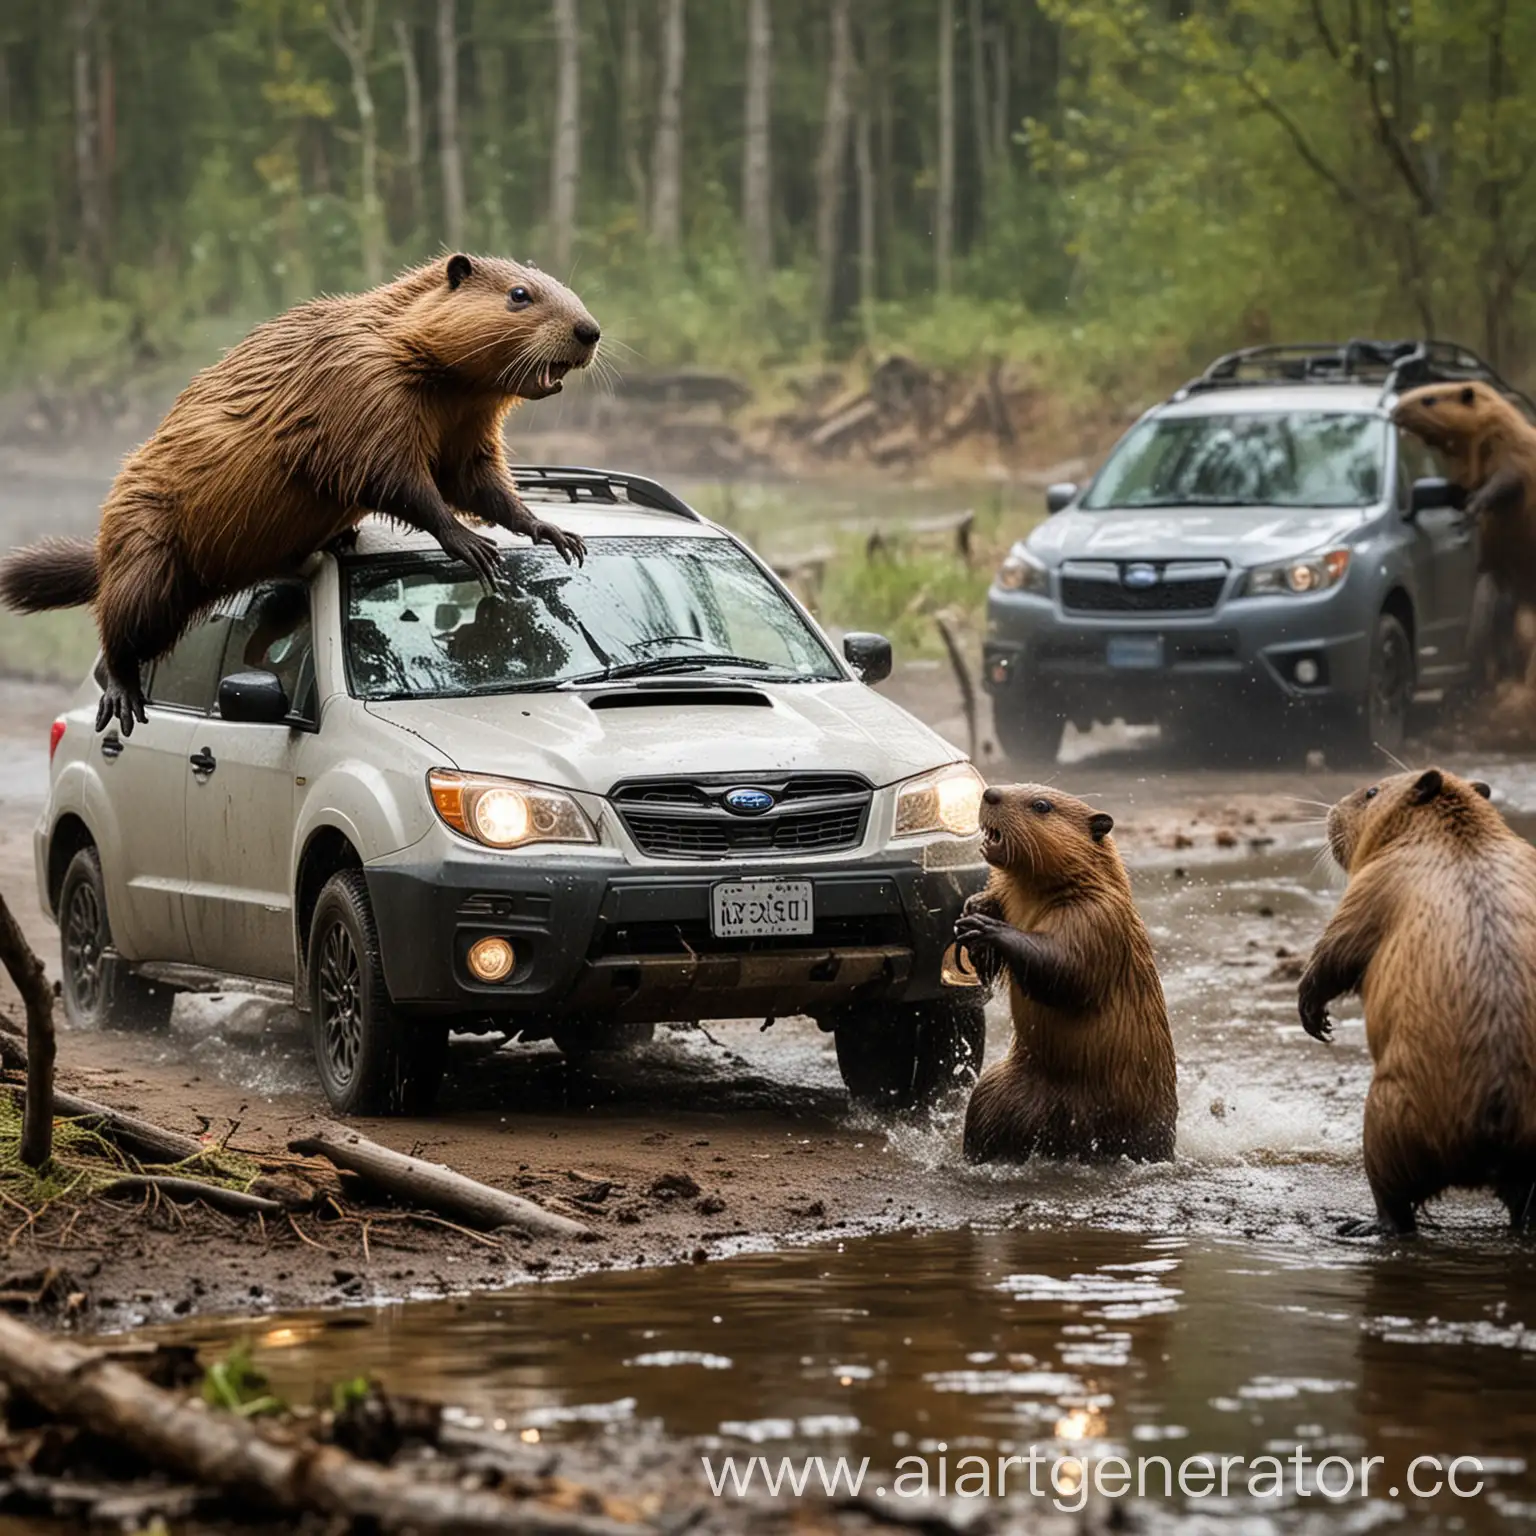 Beavers-Fighting-Human-with-Subaru-Car-in-Background